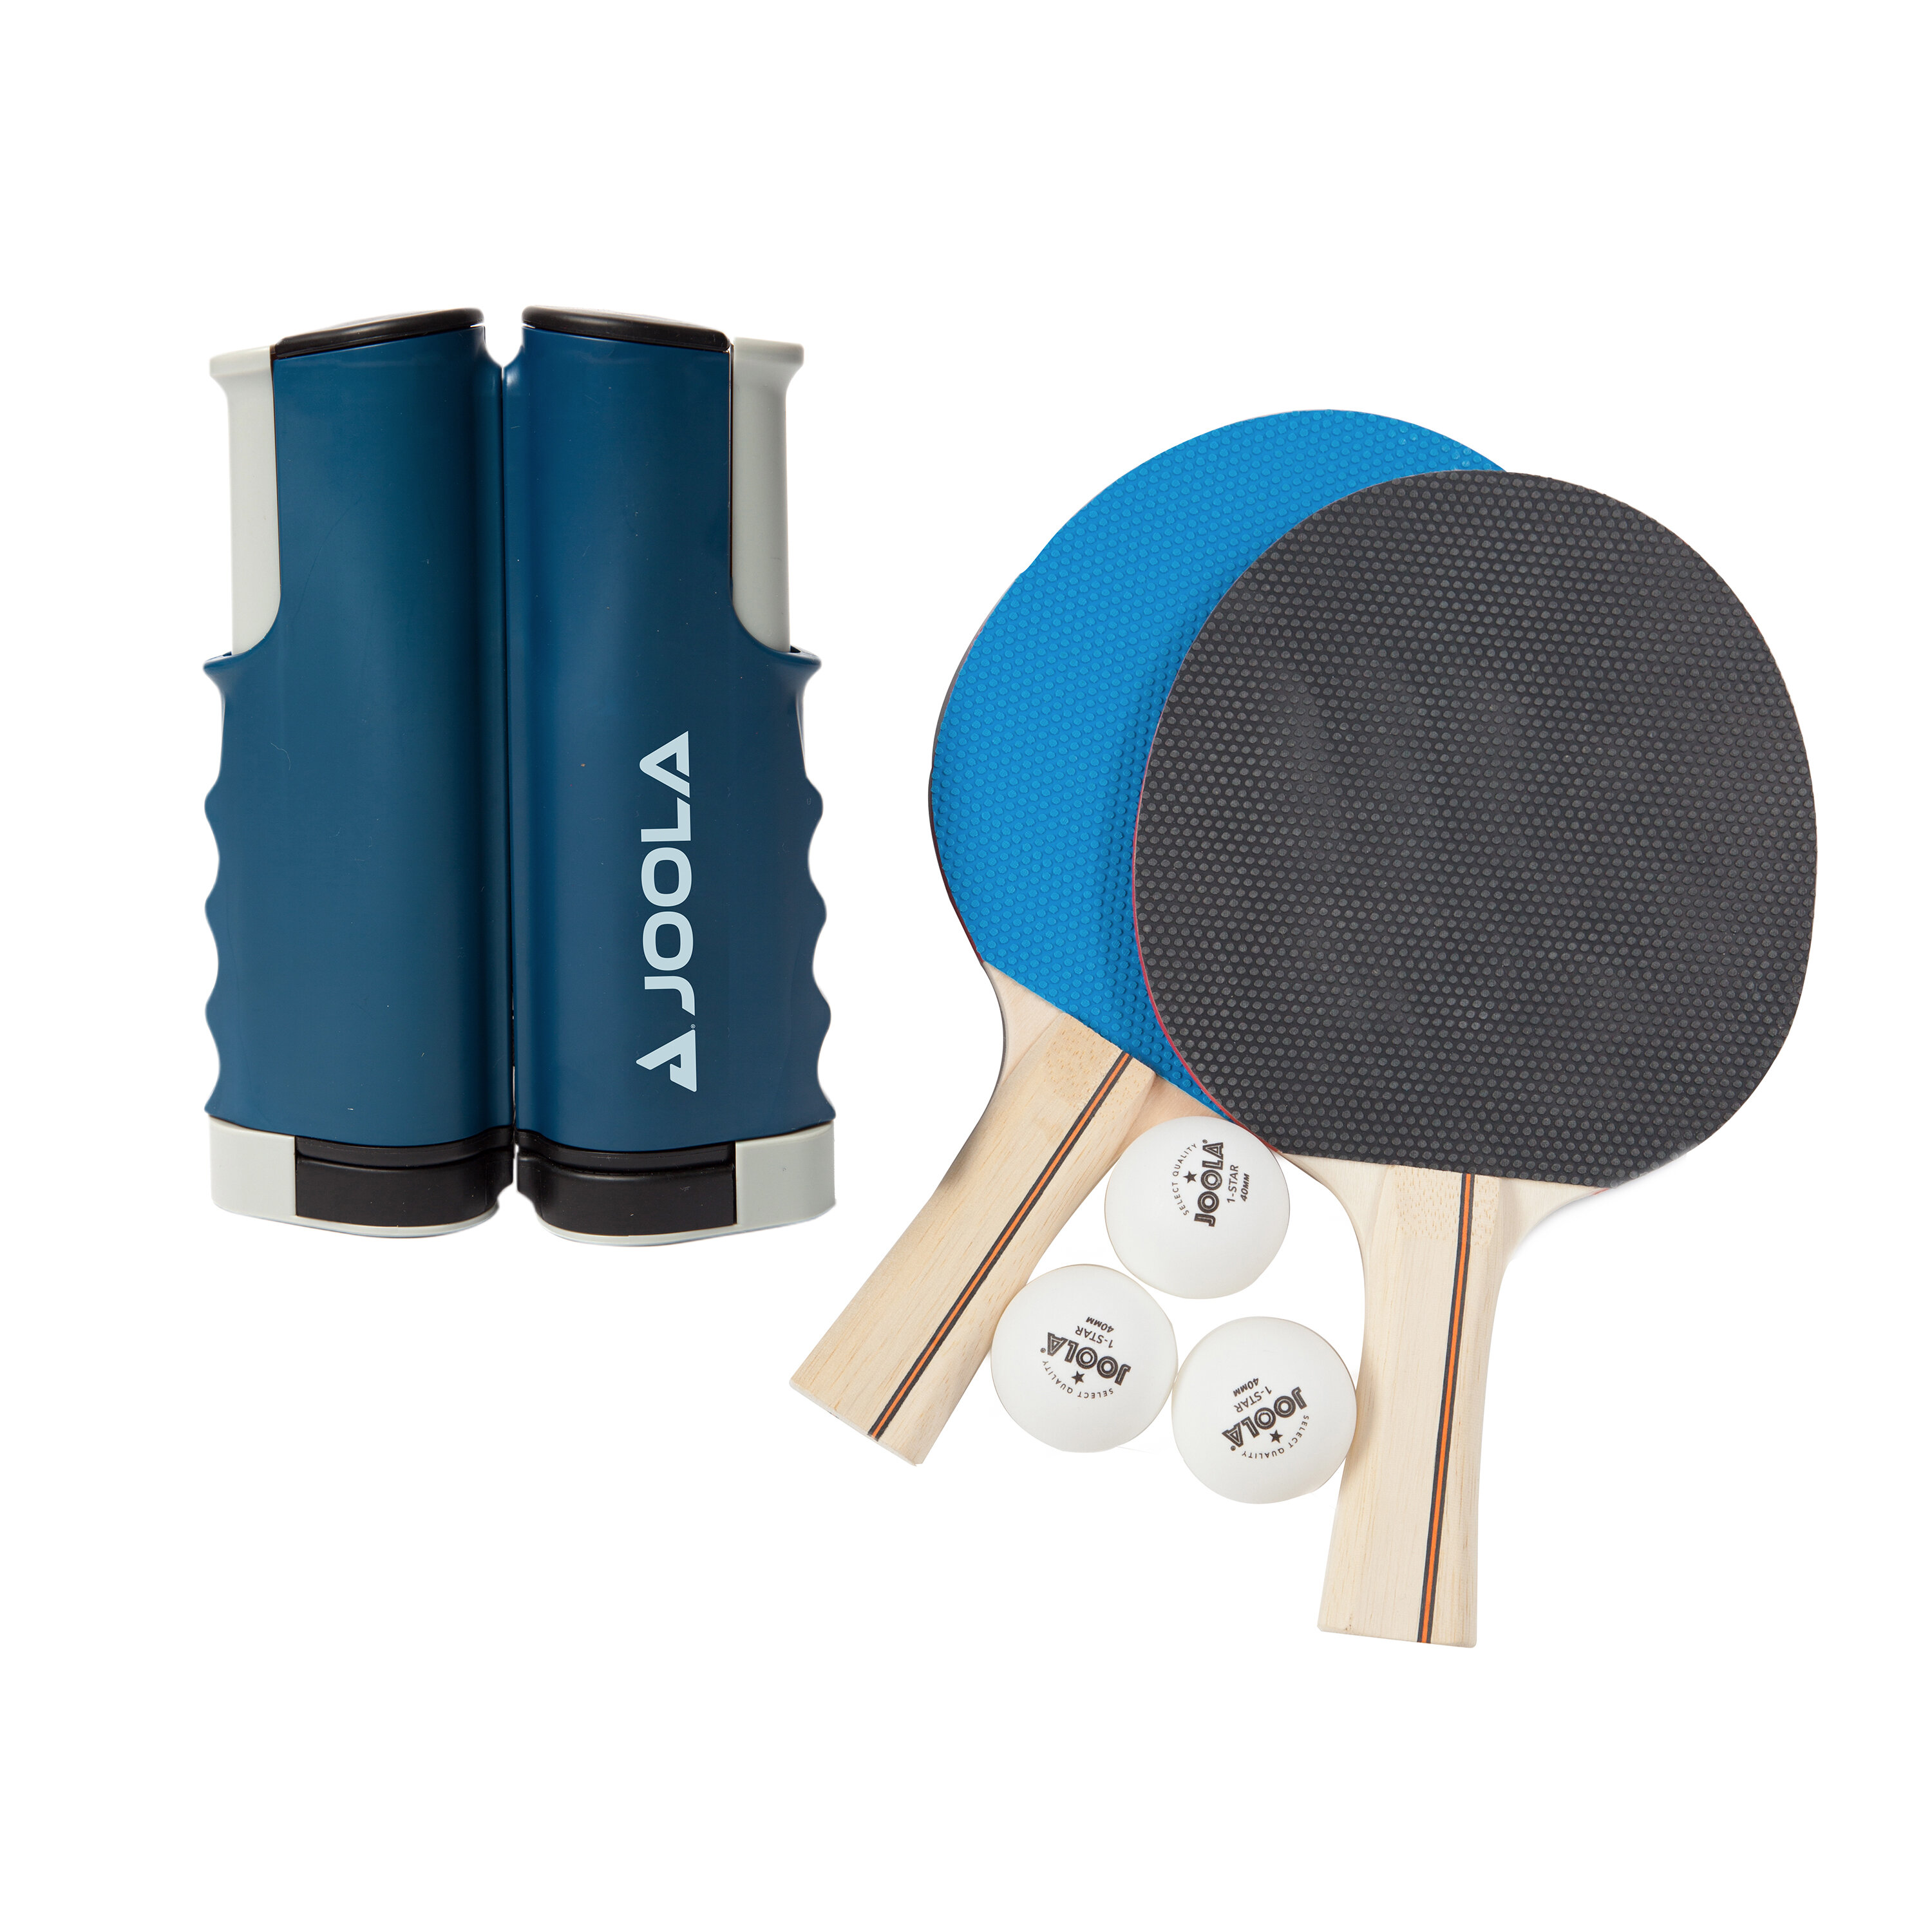 & JOOLA Essentials | Wayfair Net and Reviews Racket Table Set Tennis